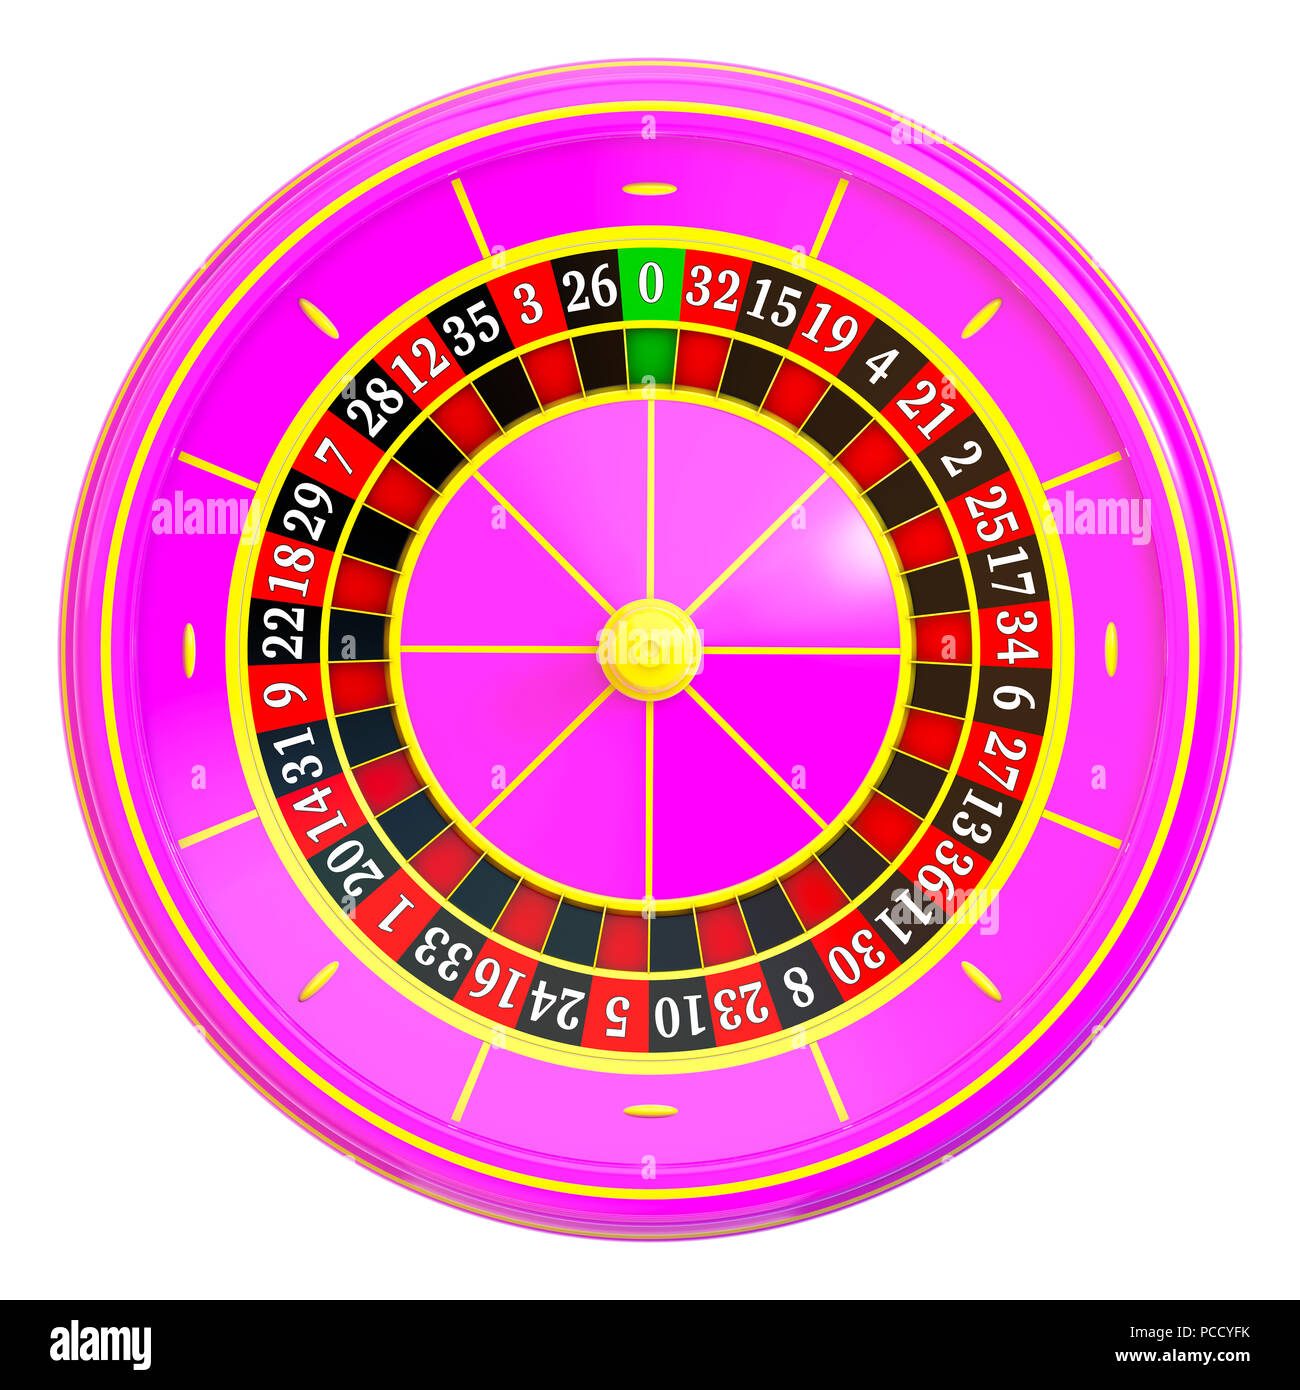 Casino roulette wheel Stock Photo